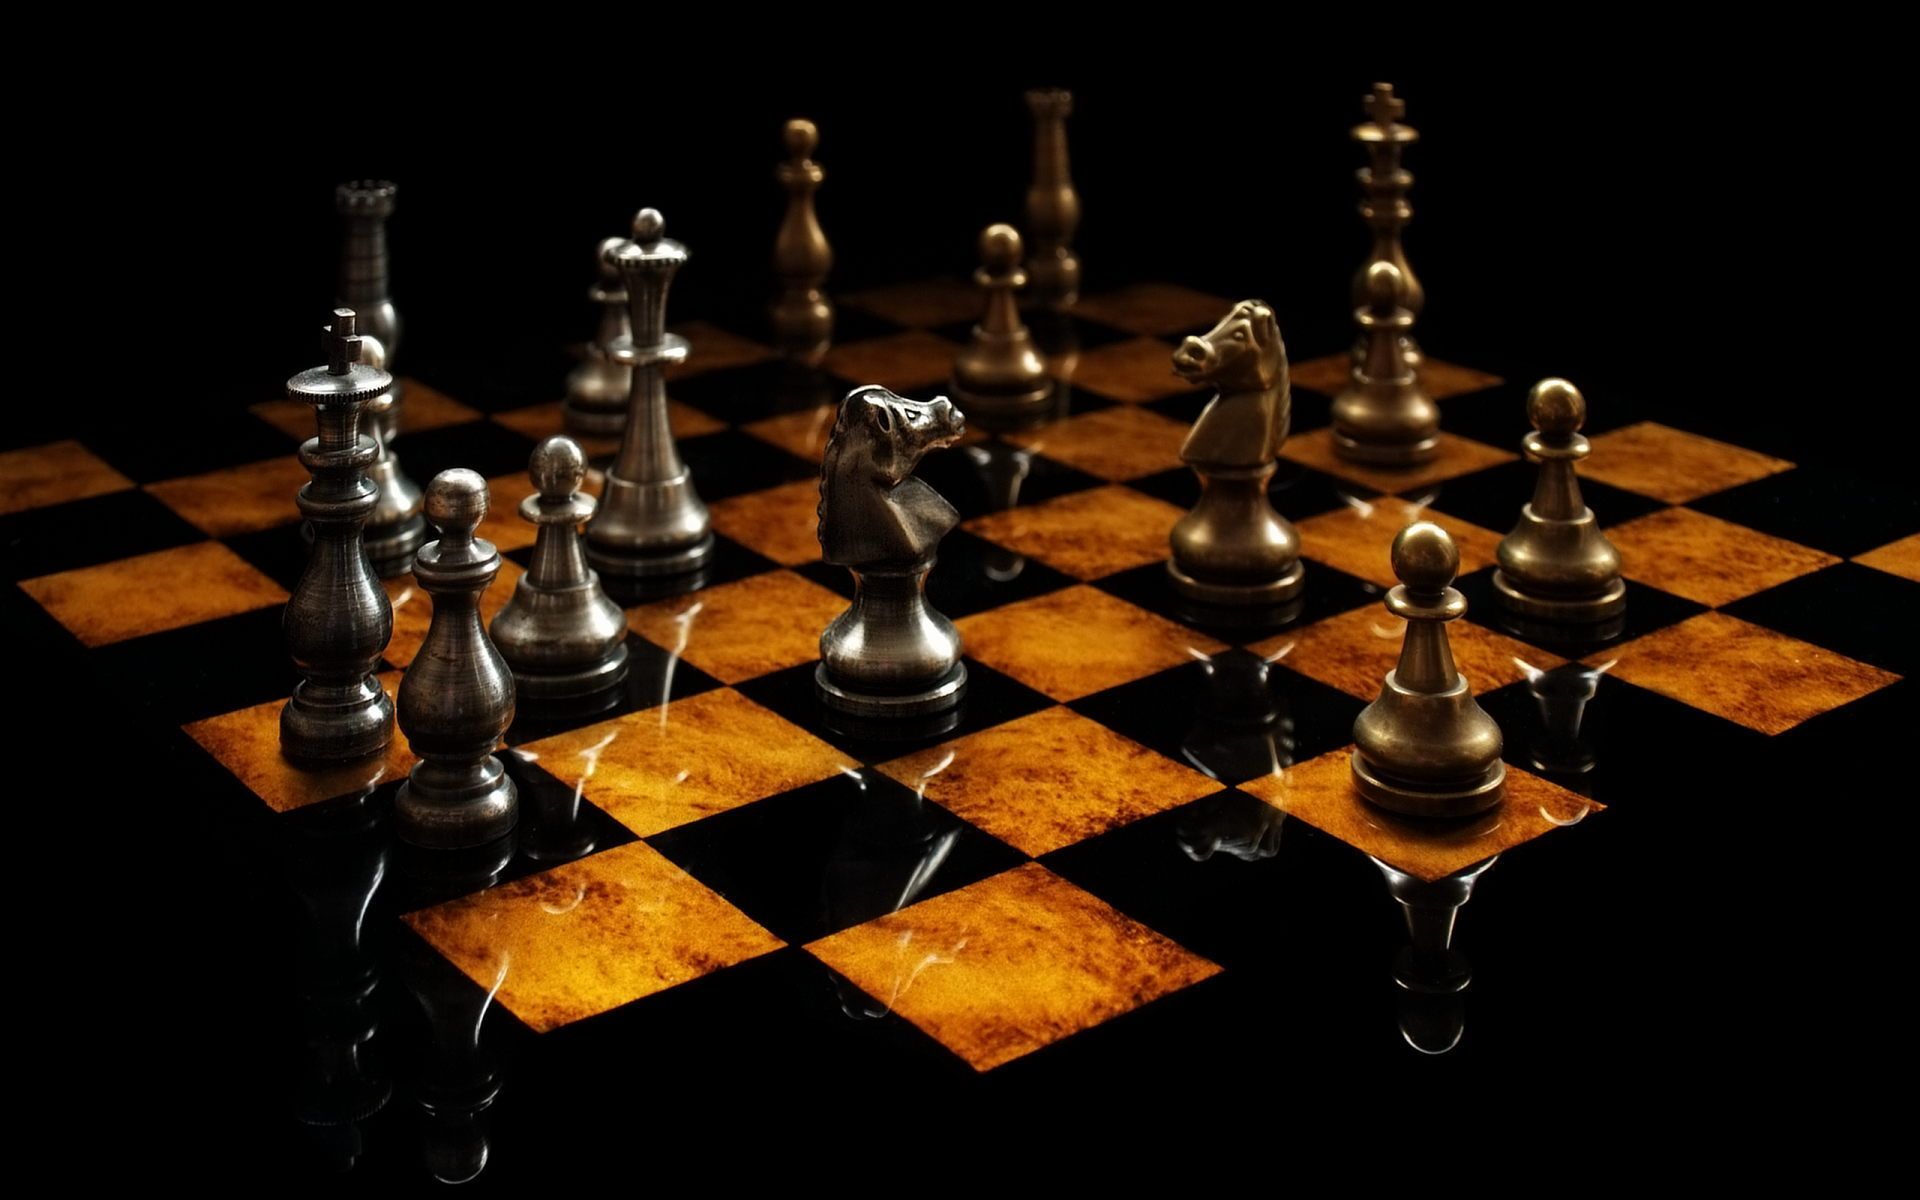 3d 체스 벽지,실내 게임 및 스포츠,보드 게임,체스 판,계략,체스